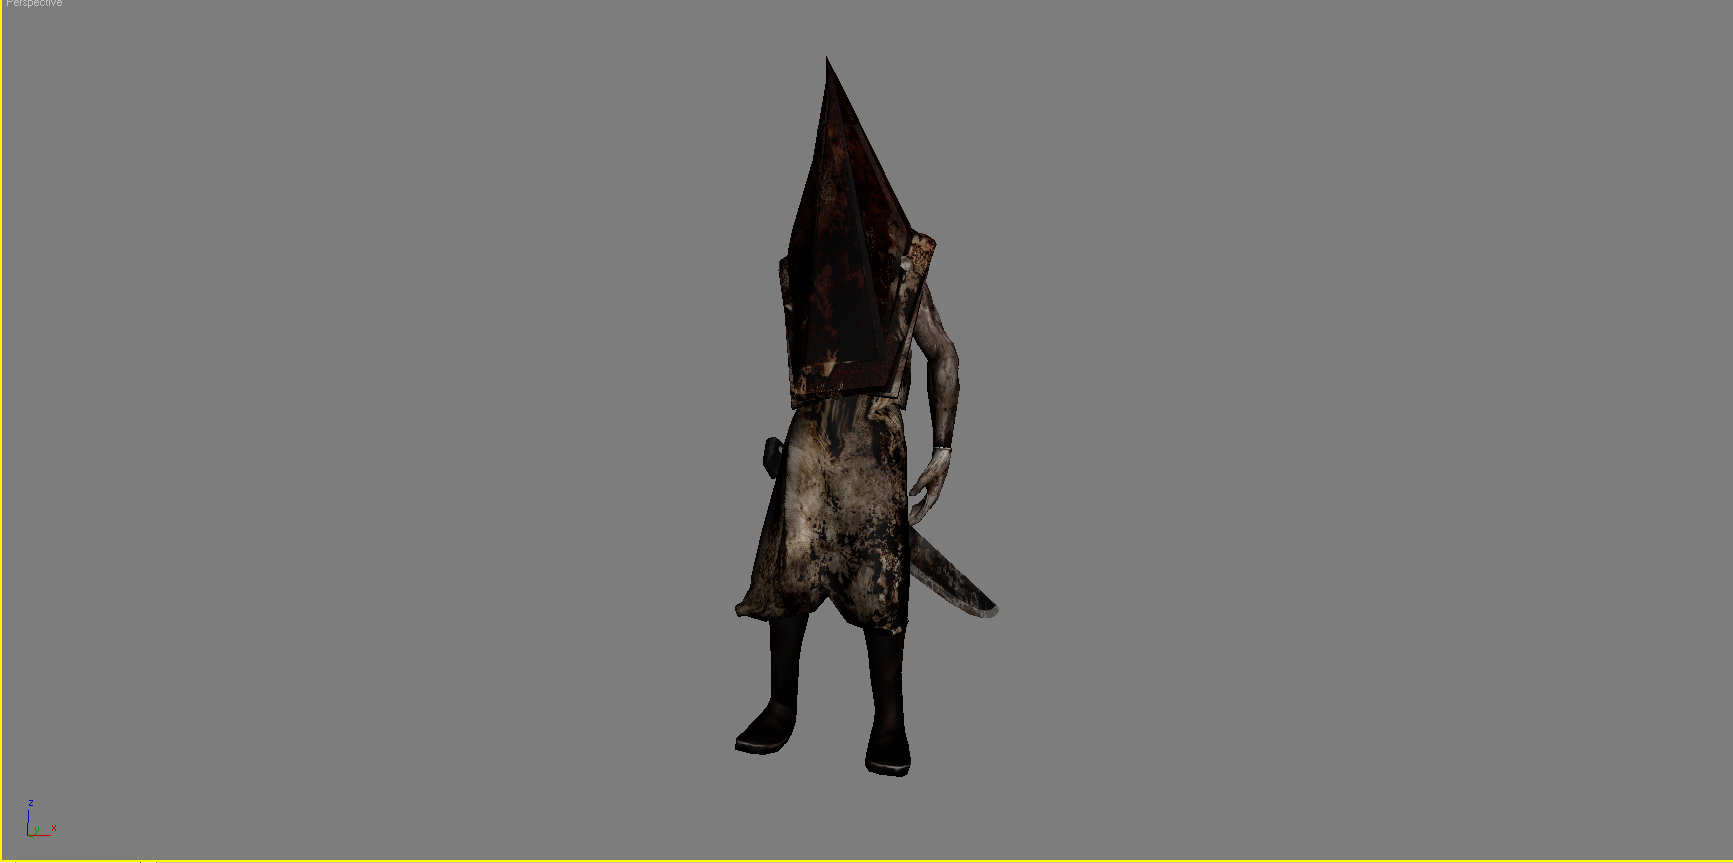 Mr Pyramid Head image - SILENT HILL 2.2. mod for Unreal Tournament 3 - ModDB